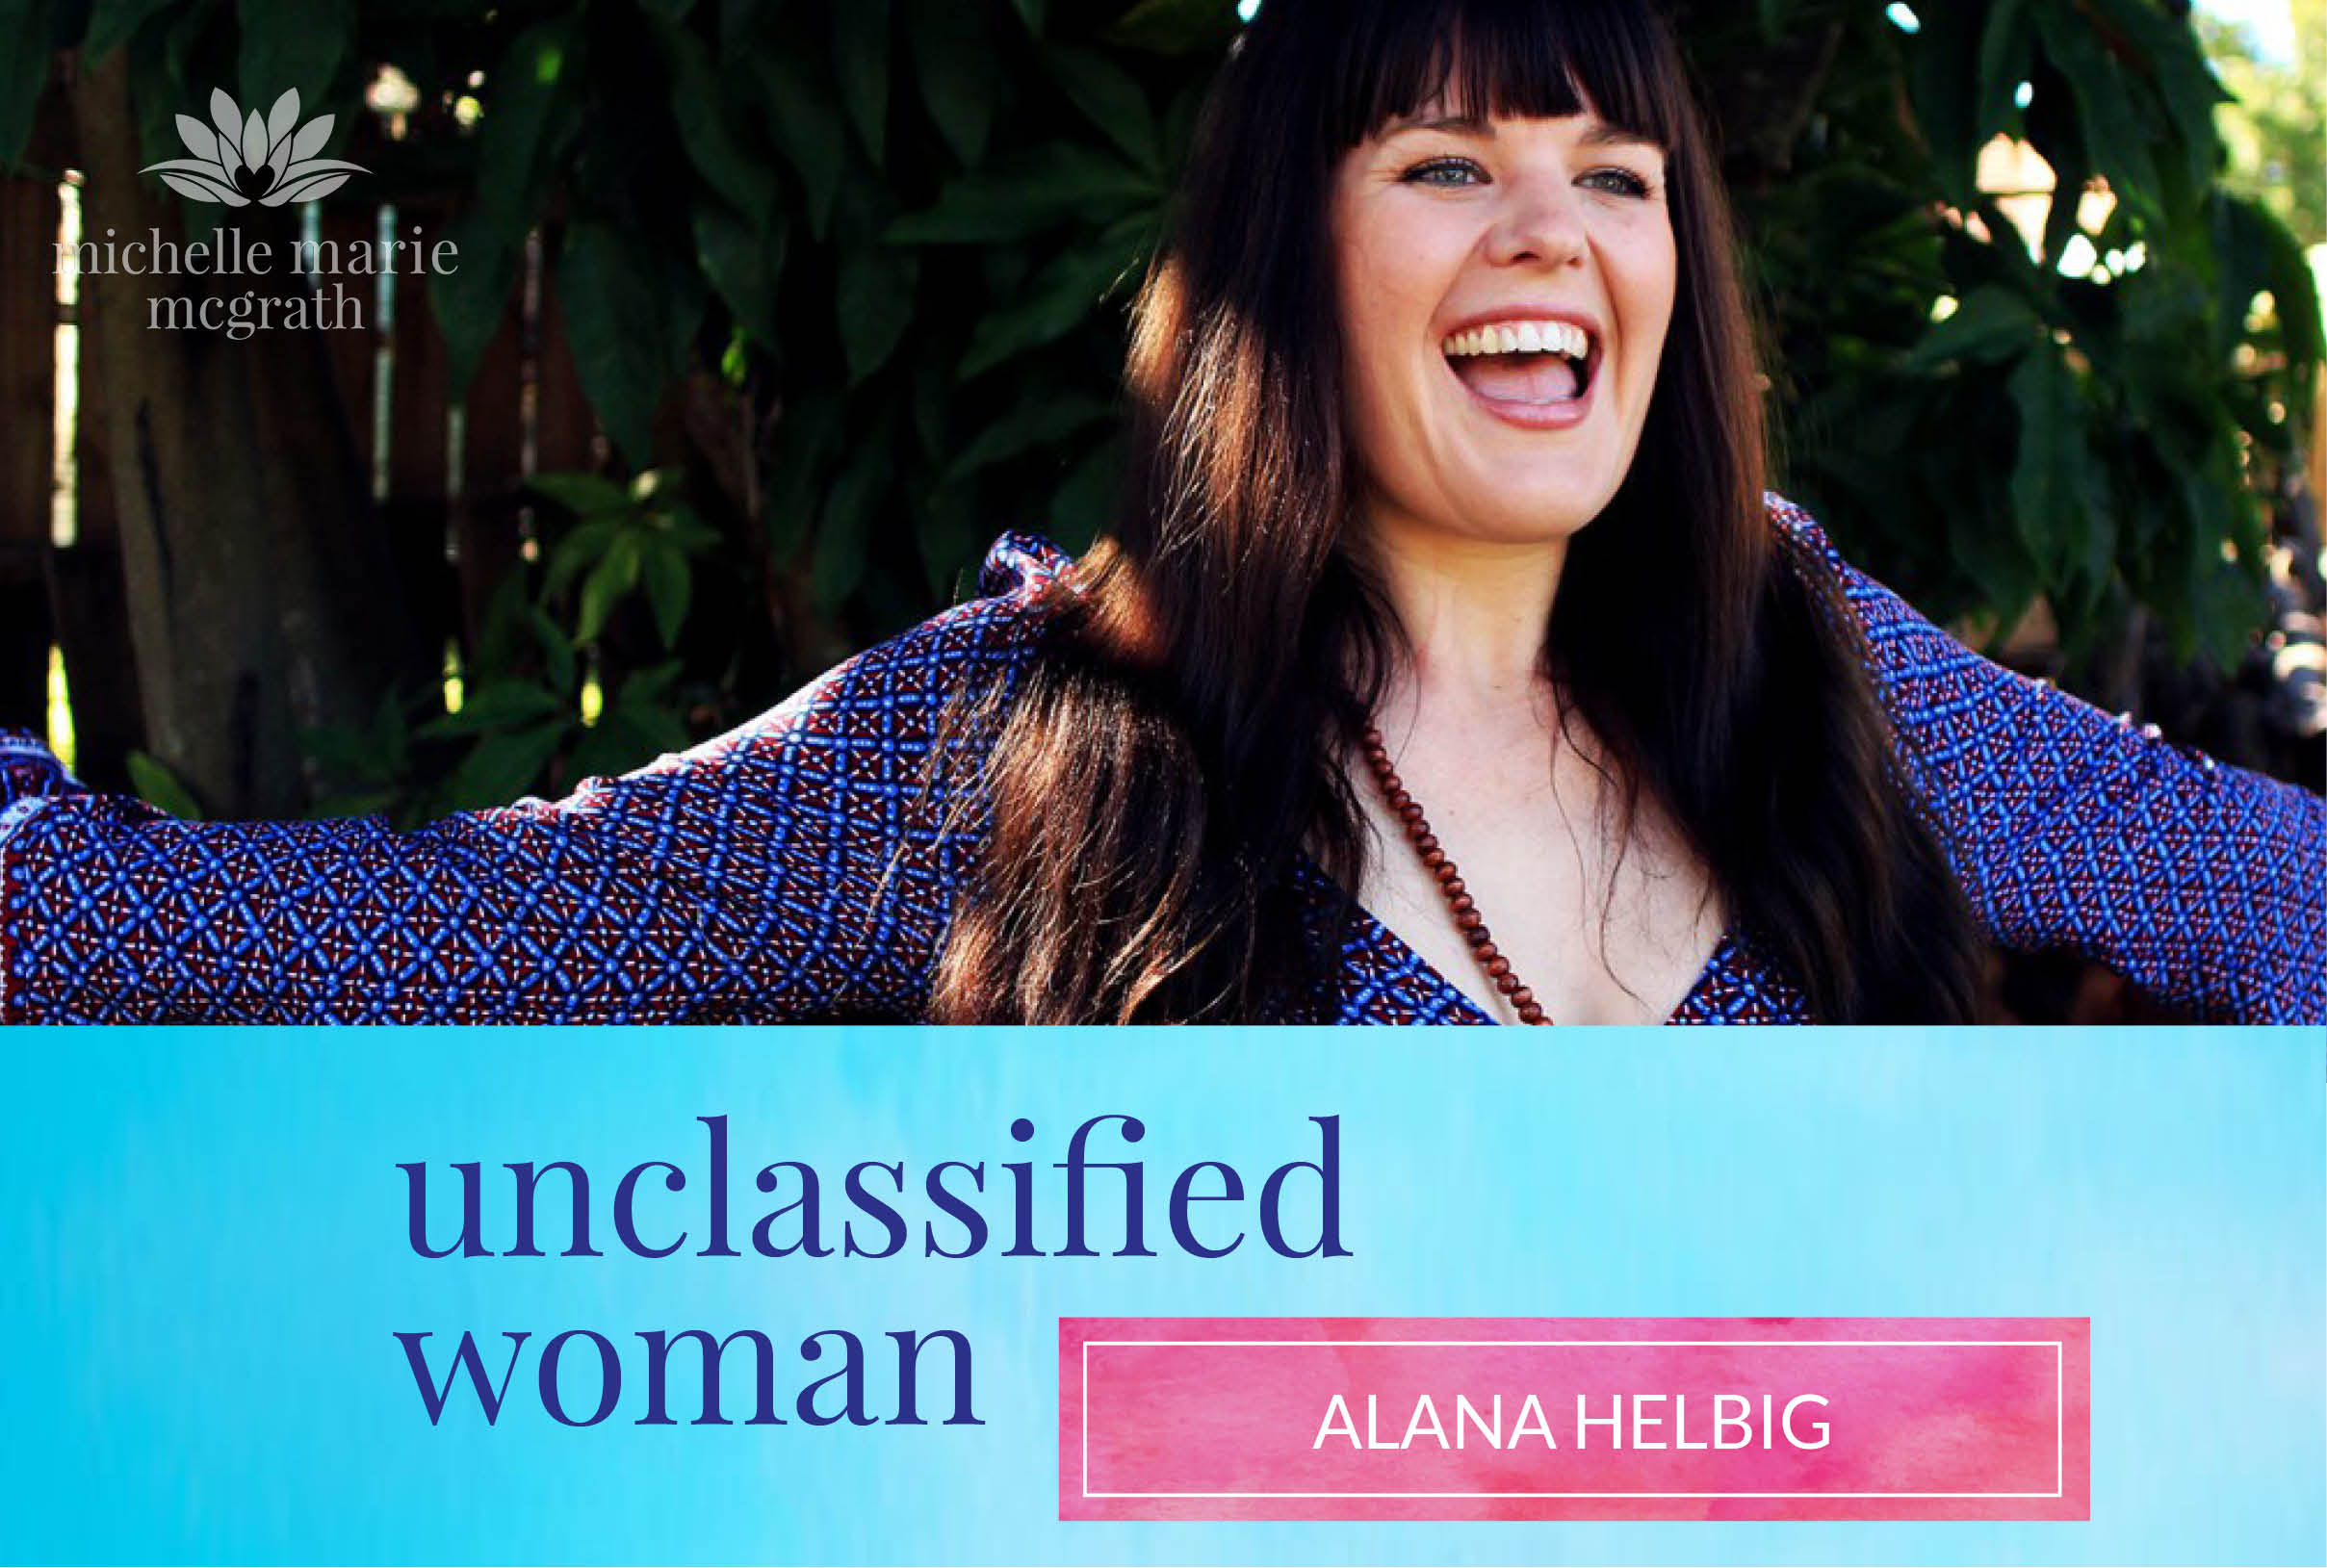 40 Alana Helbig Makes Magic